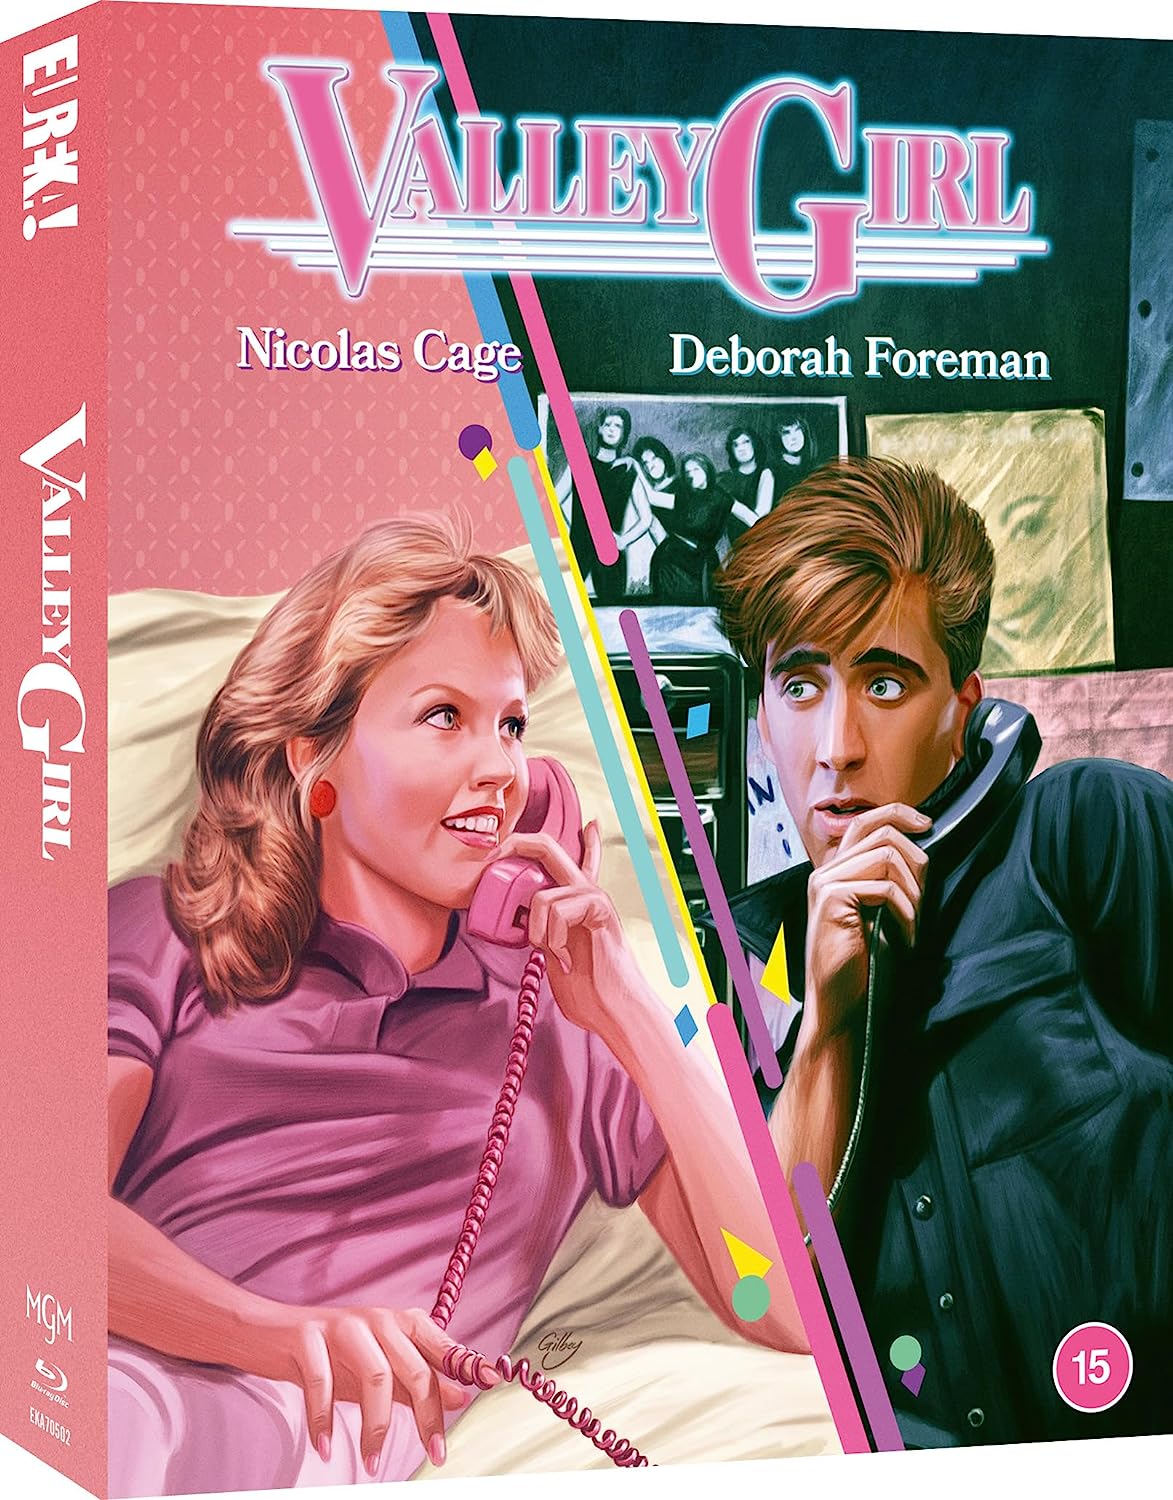 Valley Girl Limited Edition Box Set Blu-ray (Eureka/Region B)